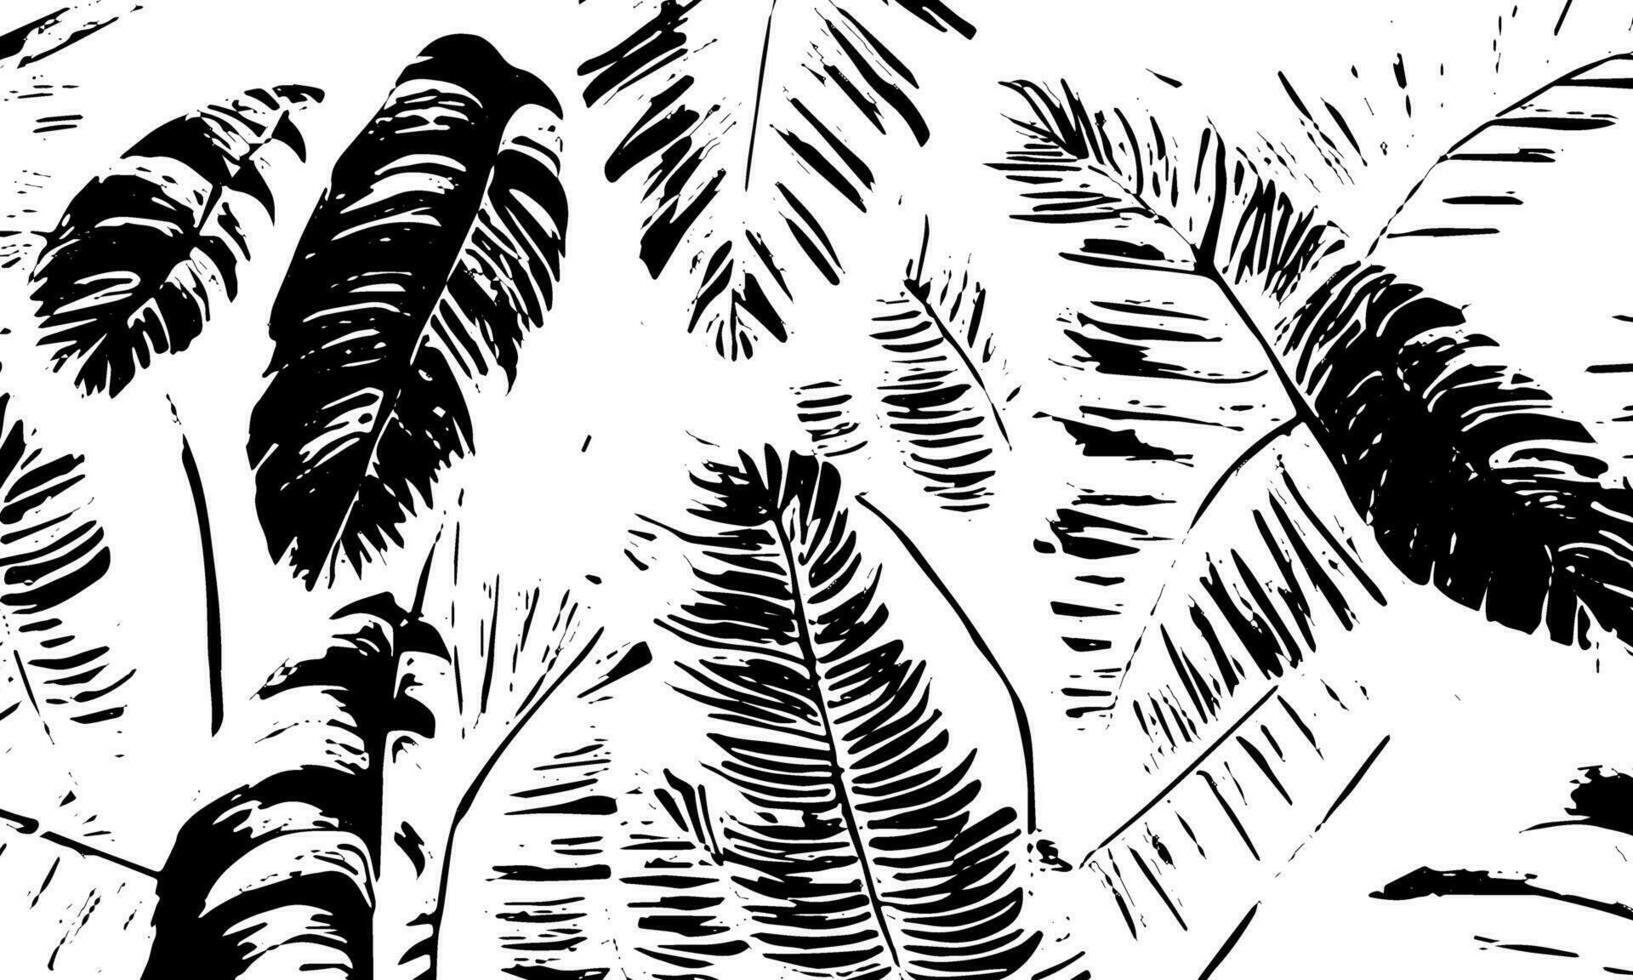 grunge detallado negro resumen textura. tropical hojas. vector antecedentes